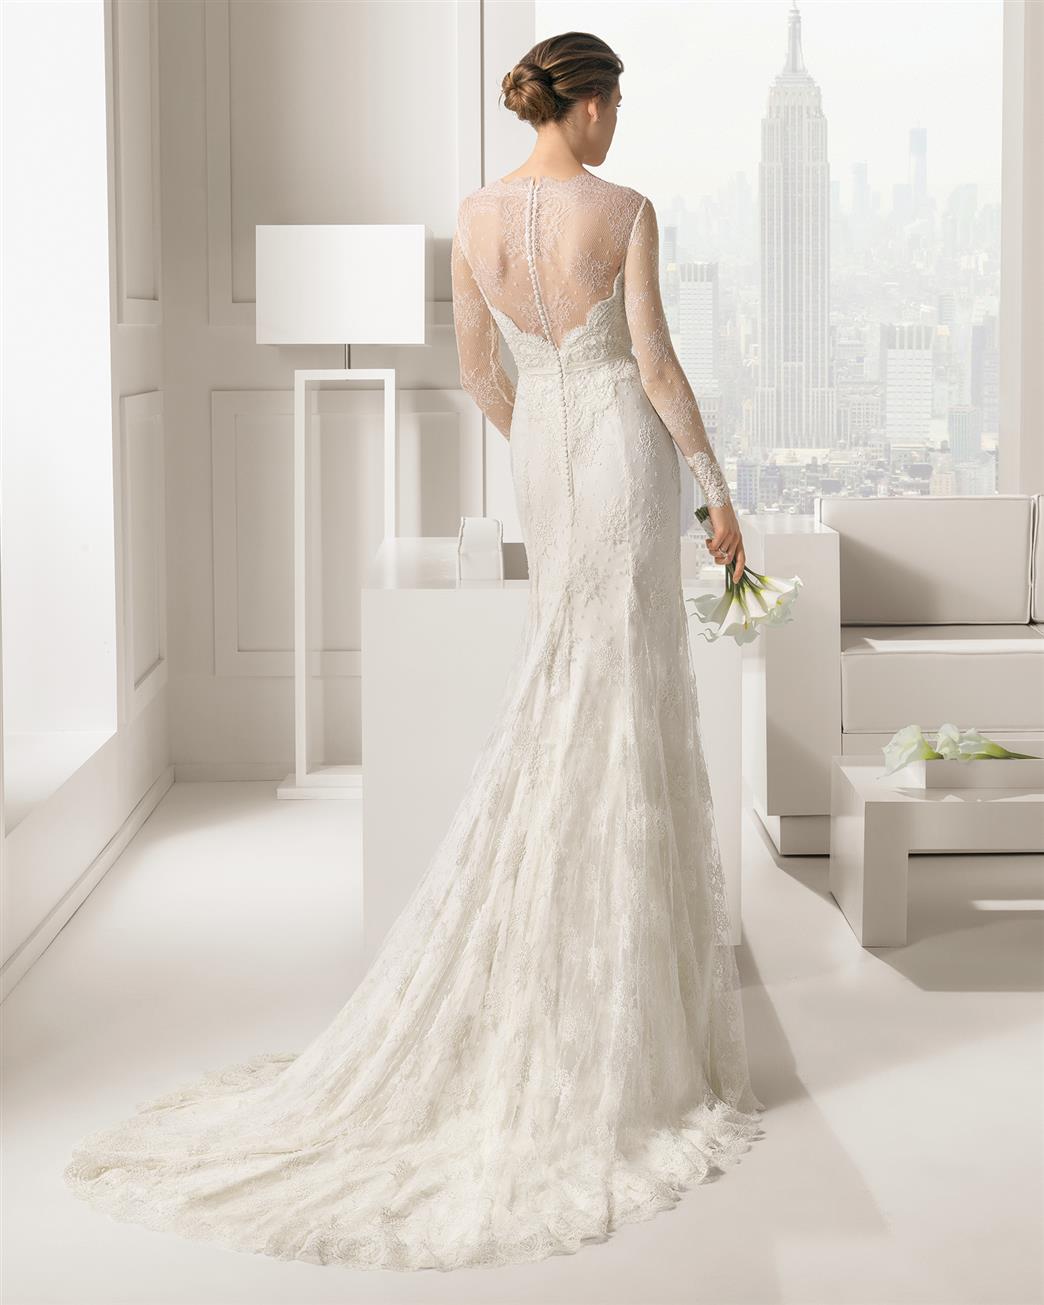 Long Sleeve Wedding Dress from Rosa Clara 2015 Collection - Santafe